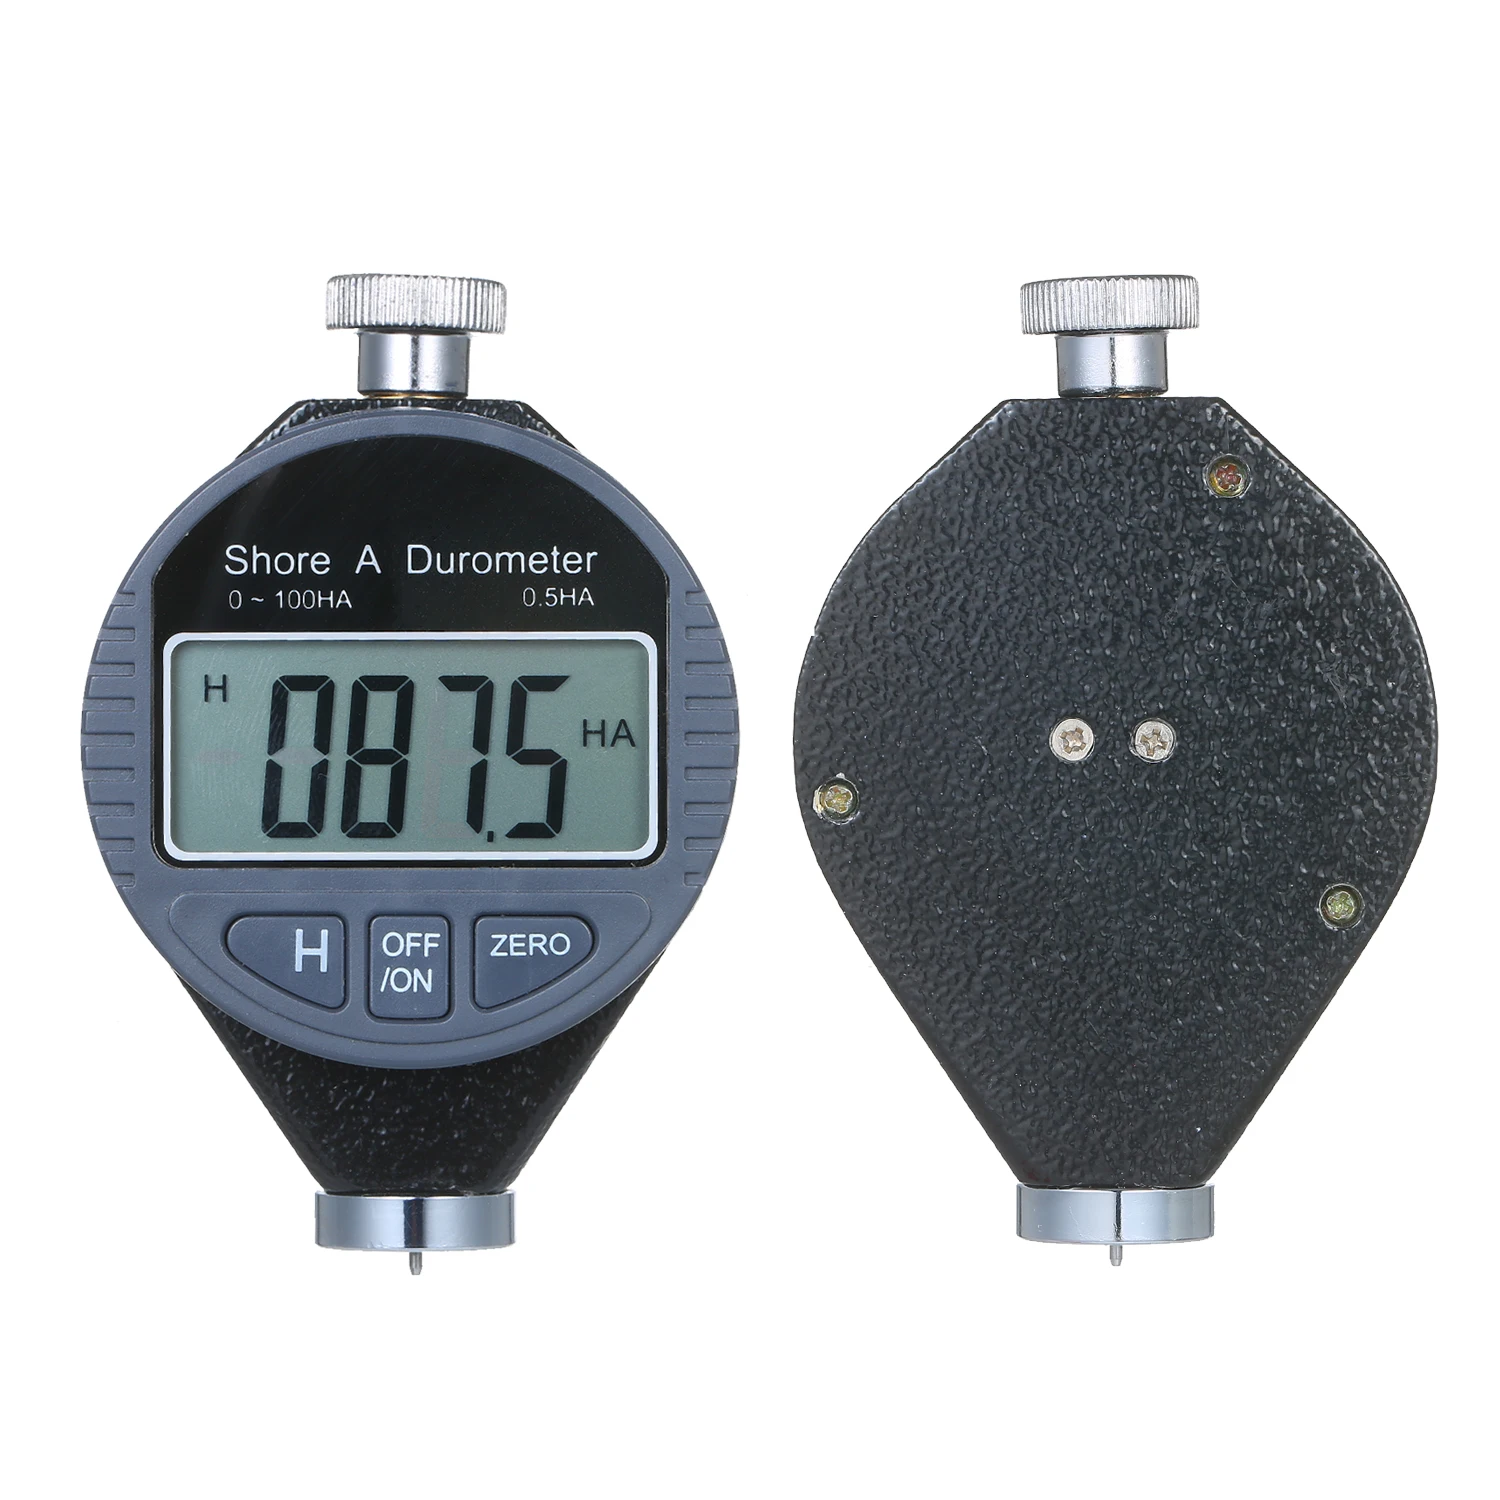 Practical LCD Digital Shore Durometer Digital Hardness Tester Meter 3 Type 